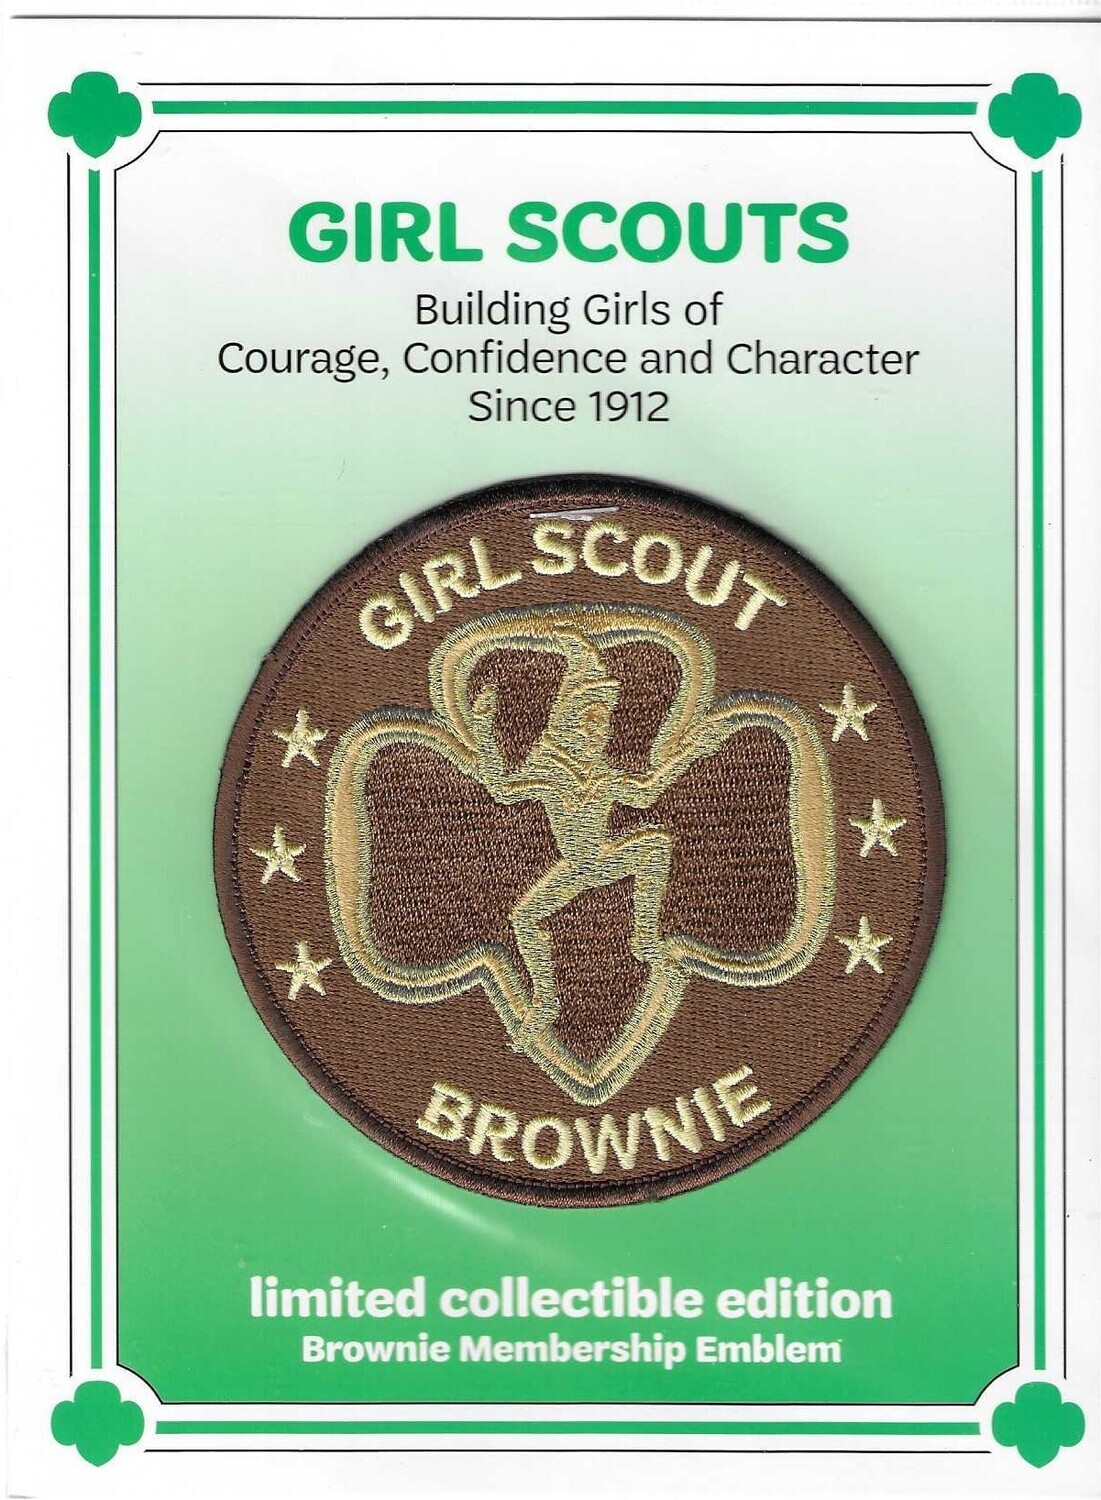 Brownie Membership Emblem LED collectors patch